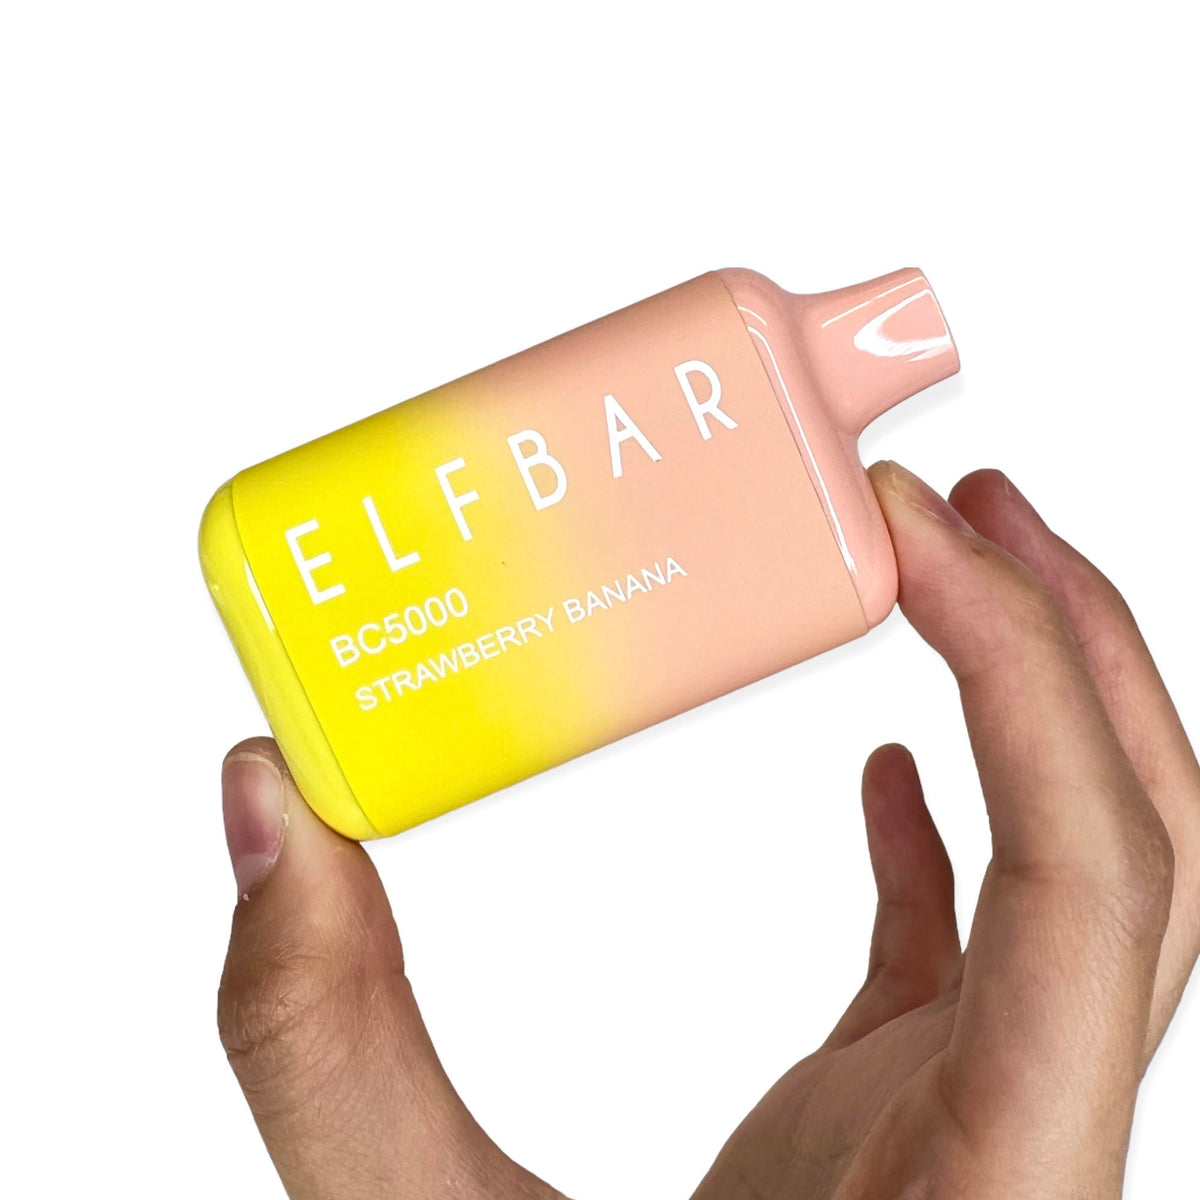 Holding Elf Bar BC5000 Strawberry Banana Flavor